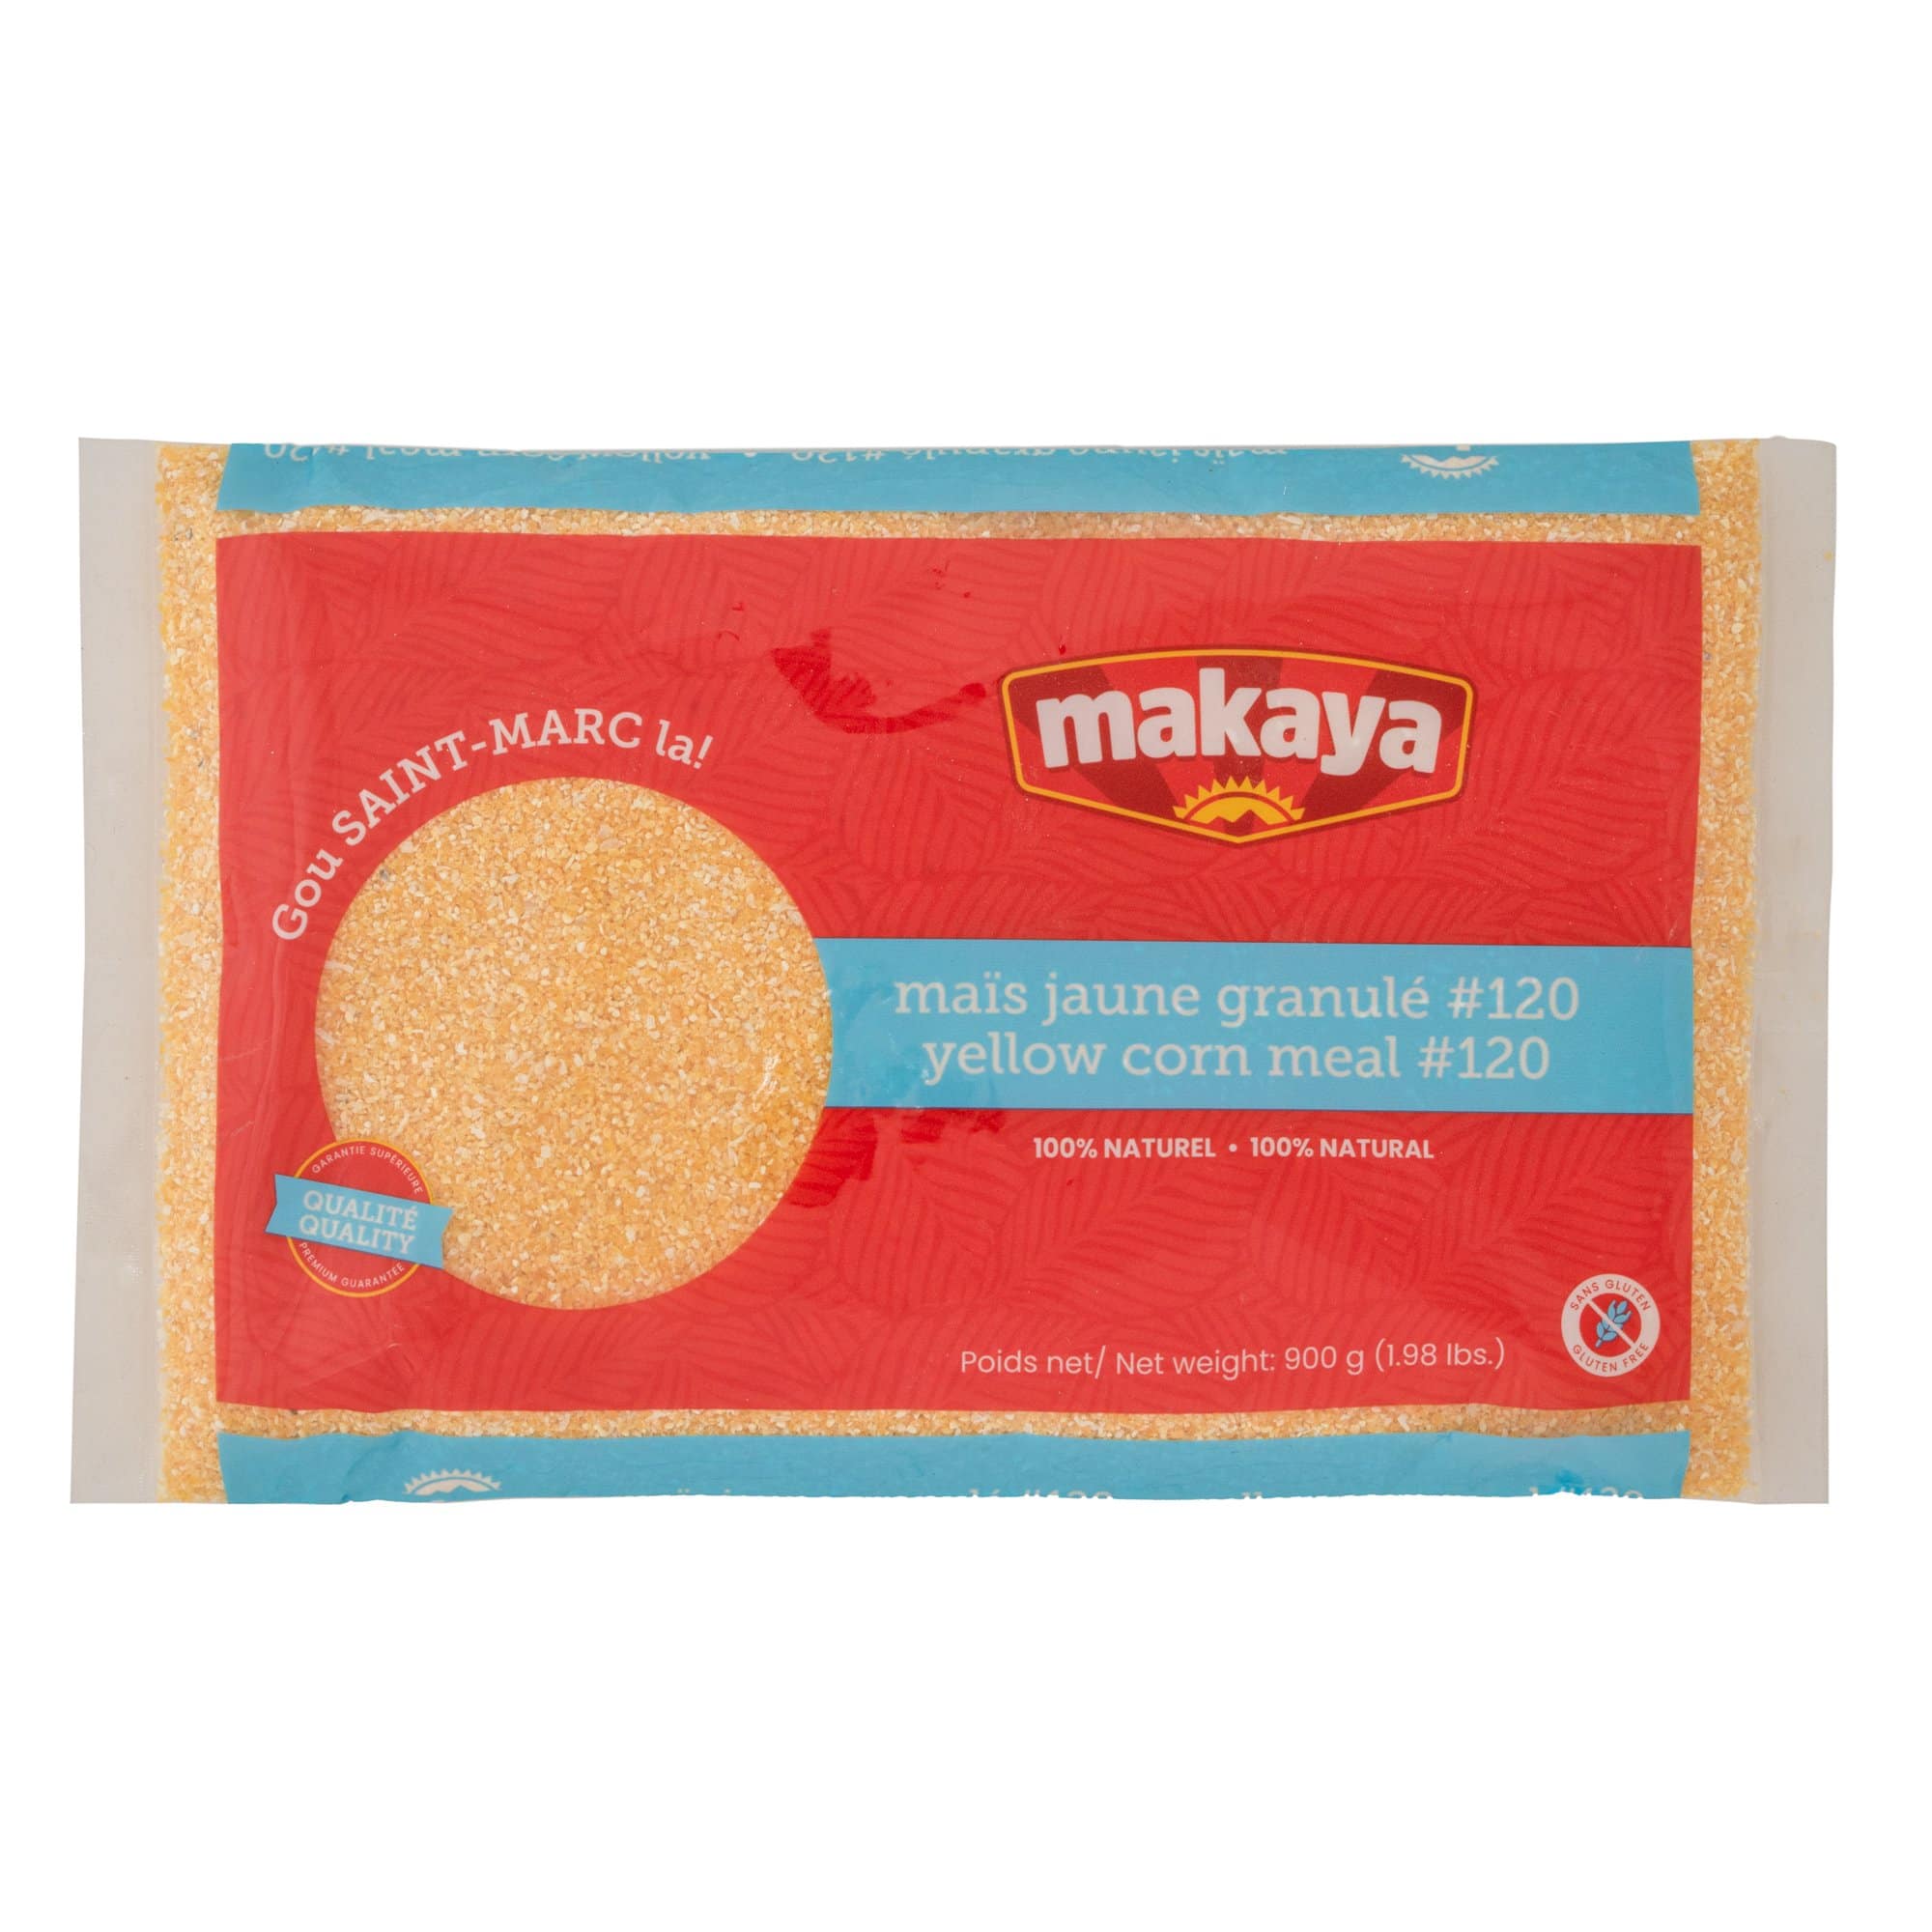 Makaya - Maïs jaune granule #120 (2lbs)